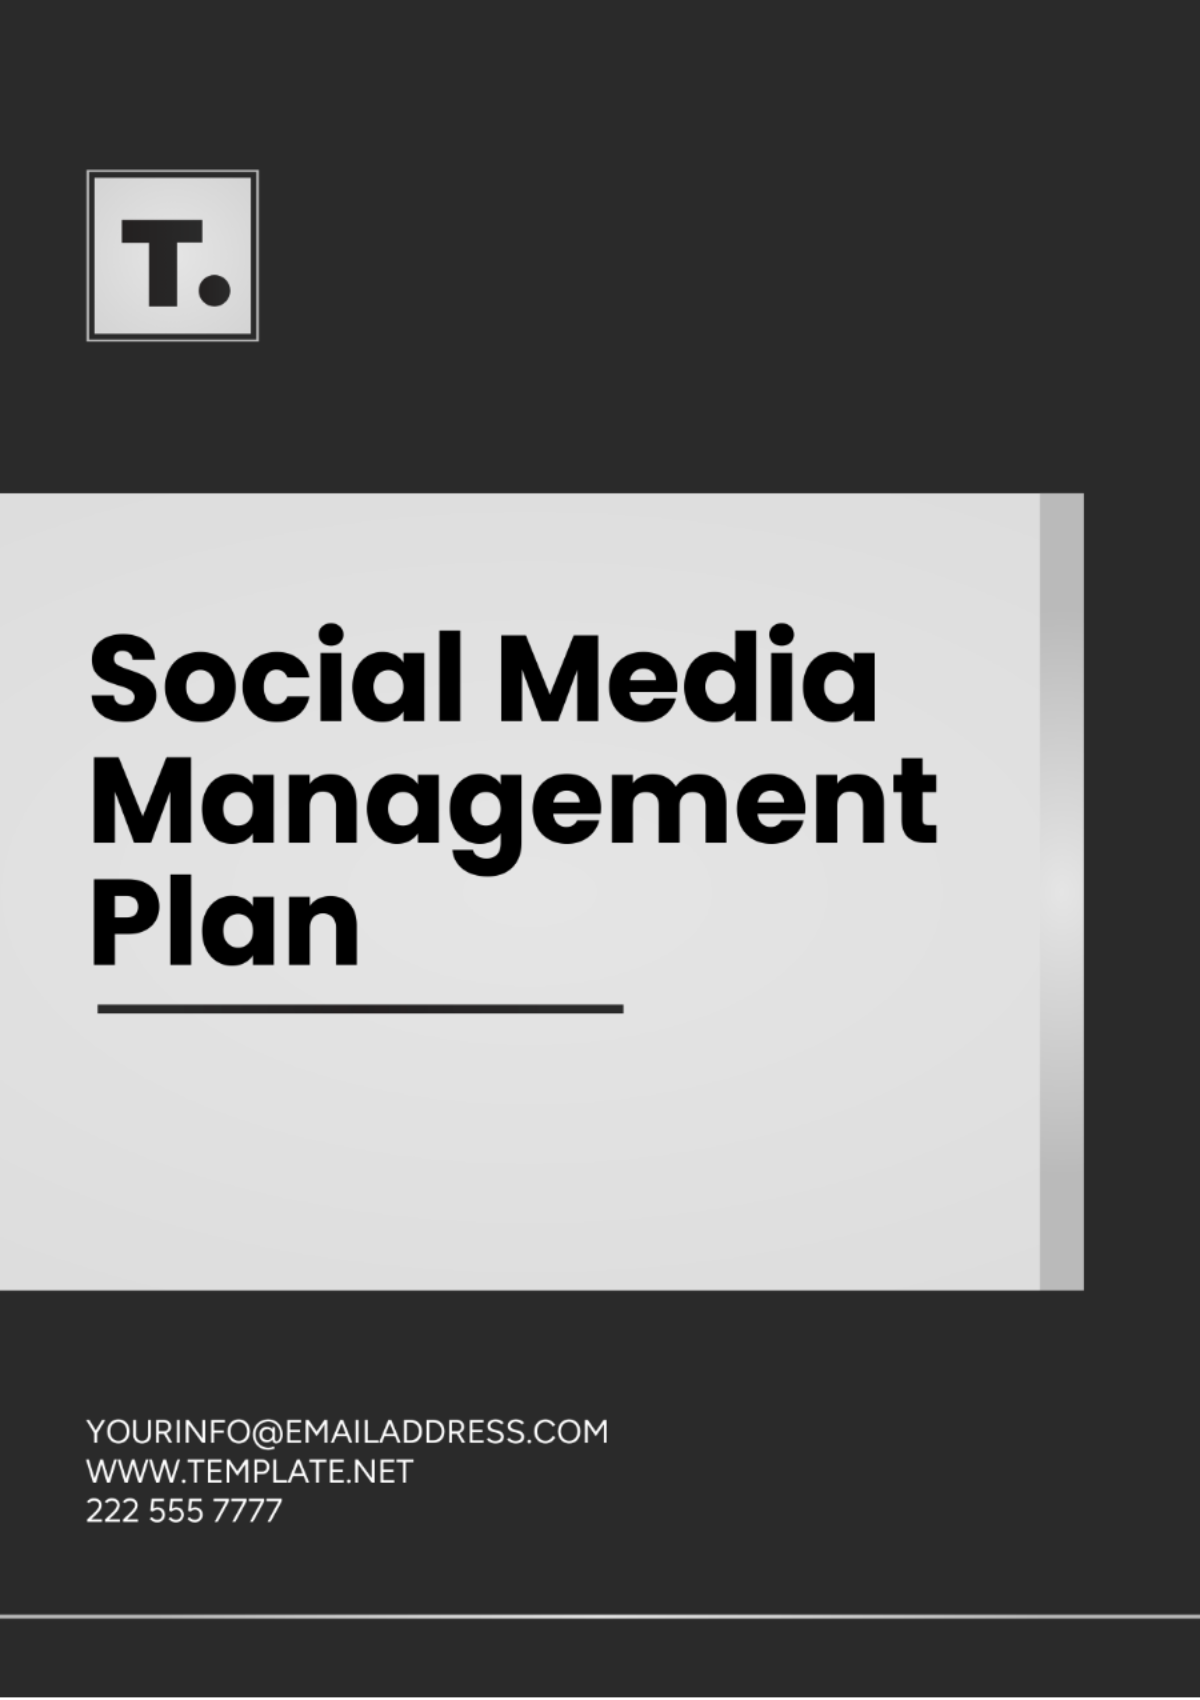 Social Media Management Plan Template